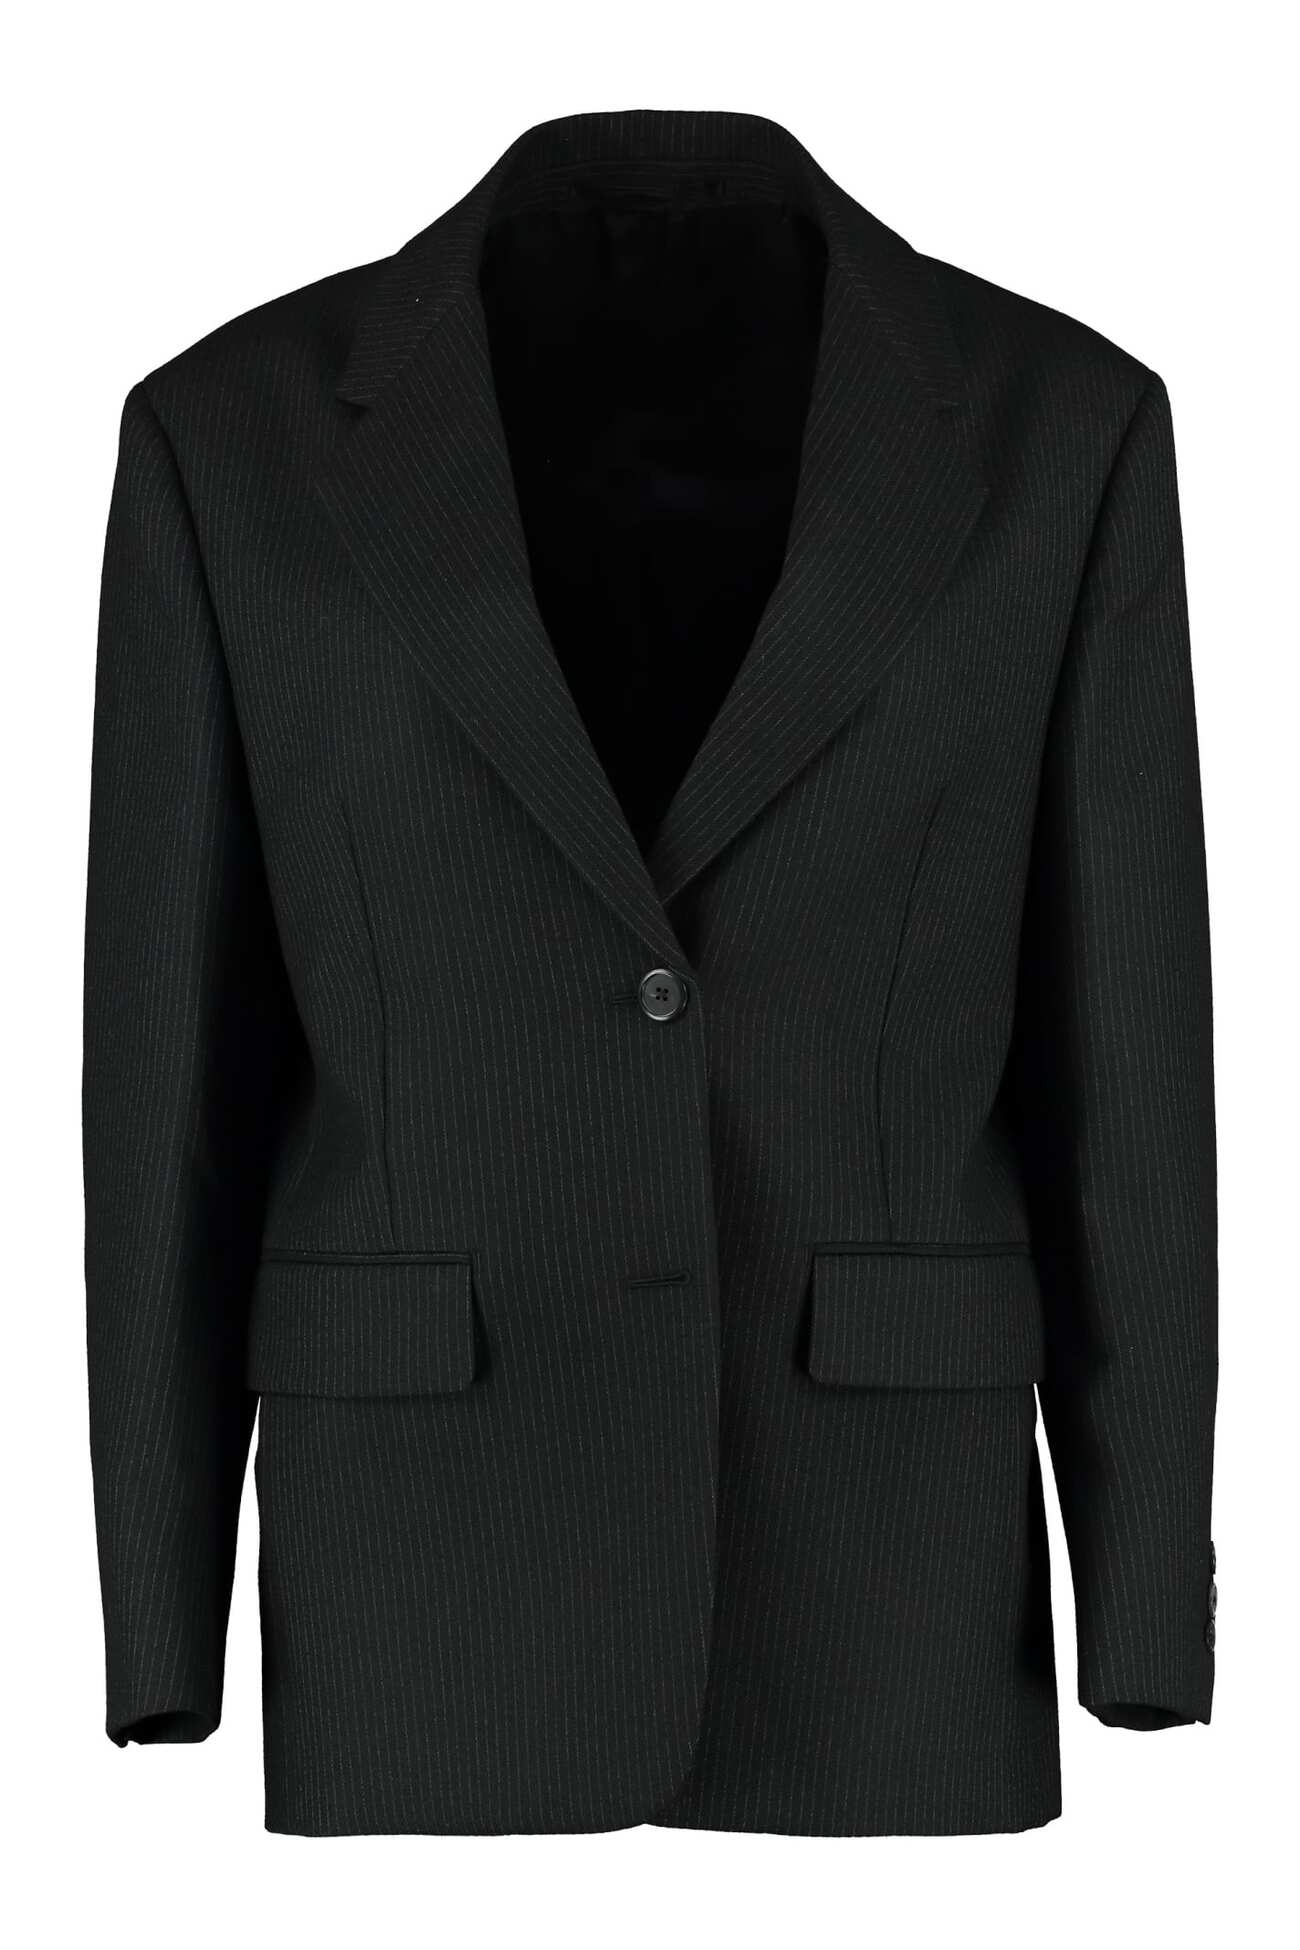 Prada Wool Pinstripe Blazer in black